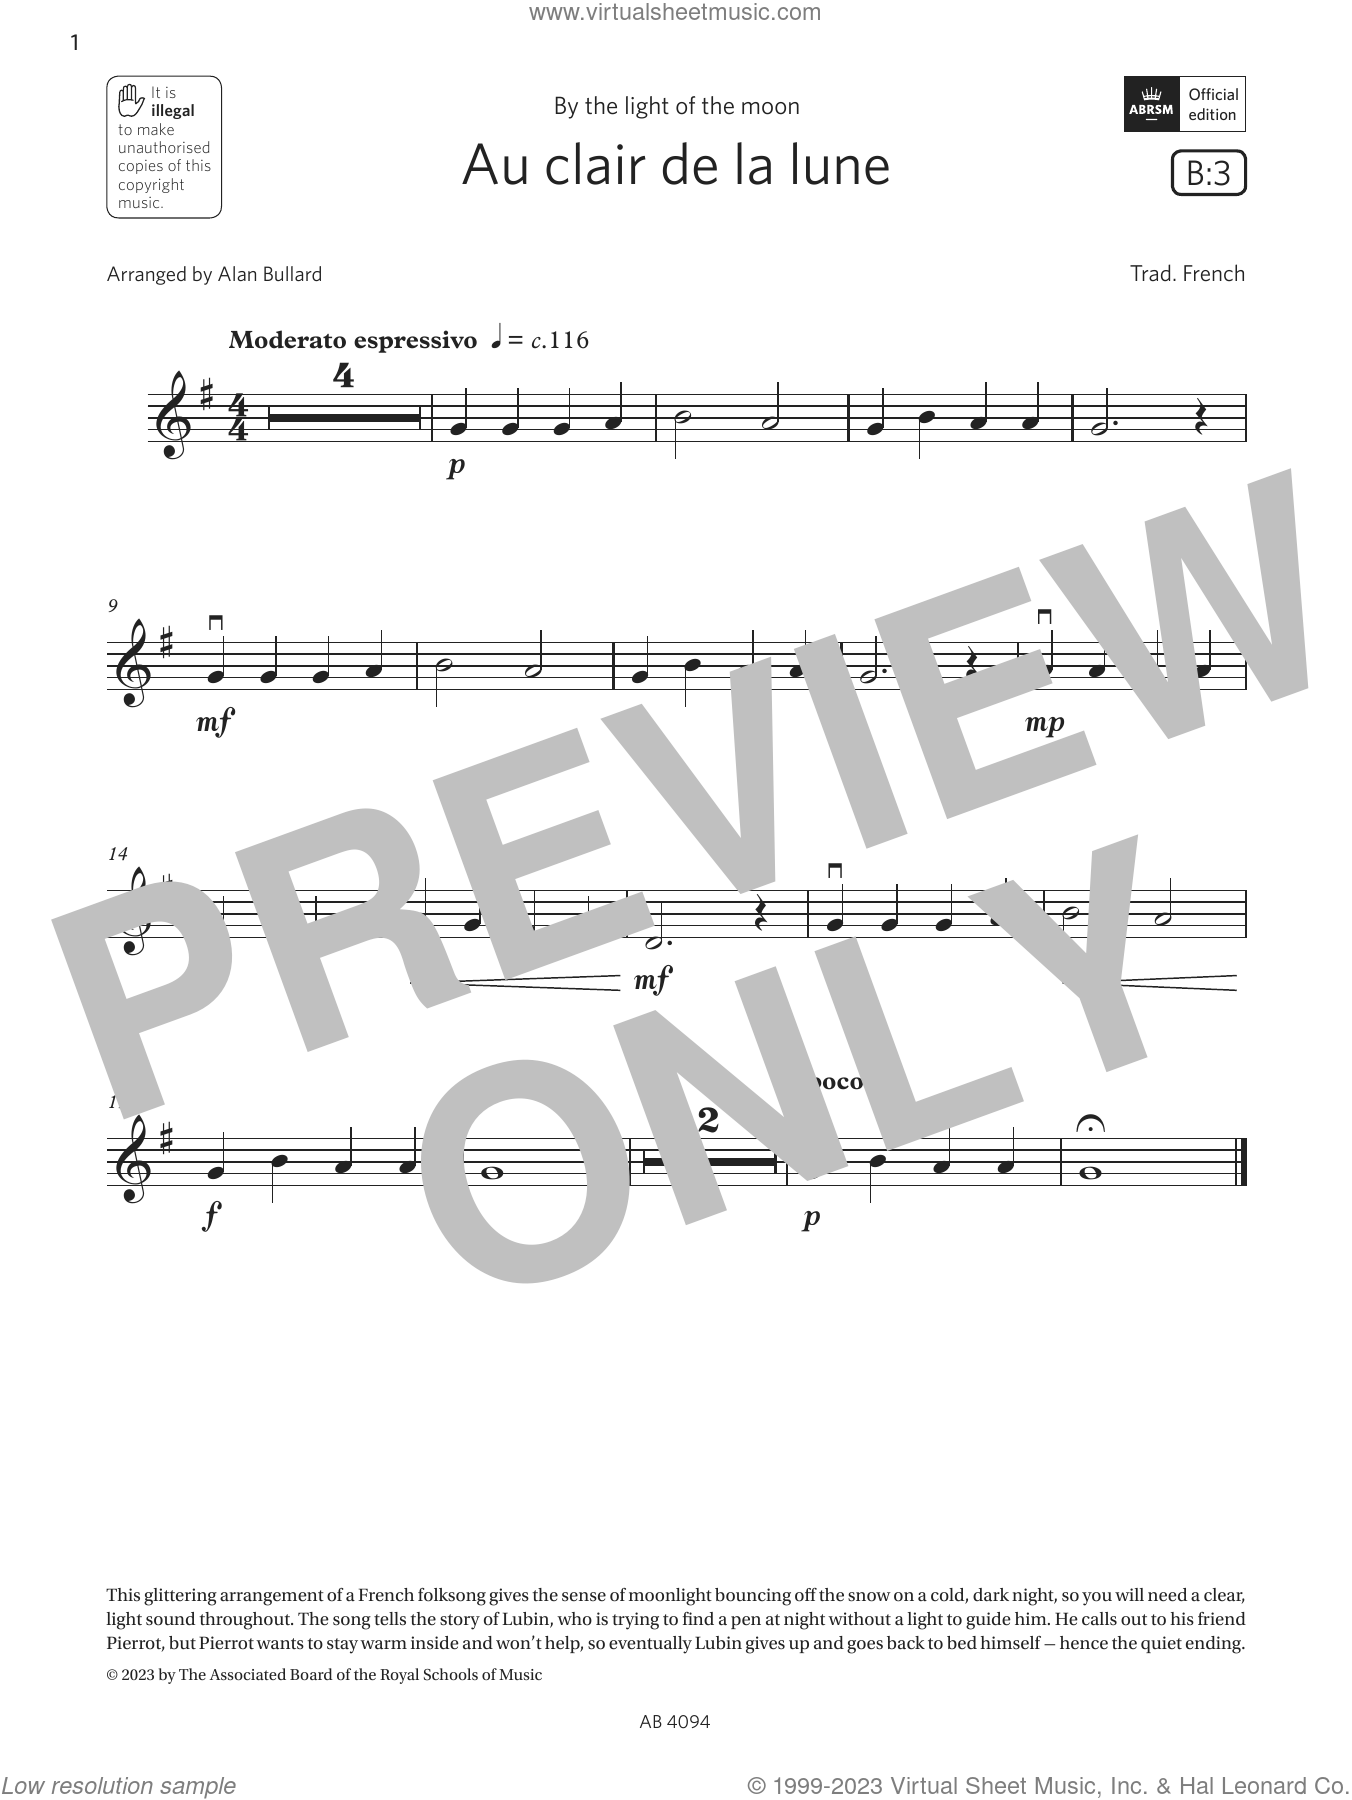 Kayser: Thirty-Six Etudes, Op. 20: No. 19 Part - Digital Sheet Music  Download